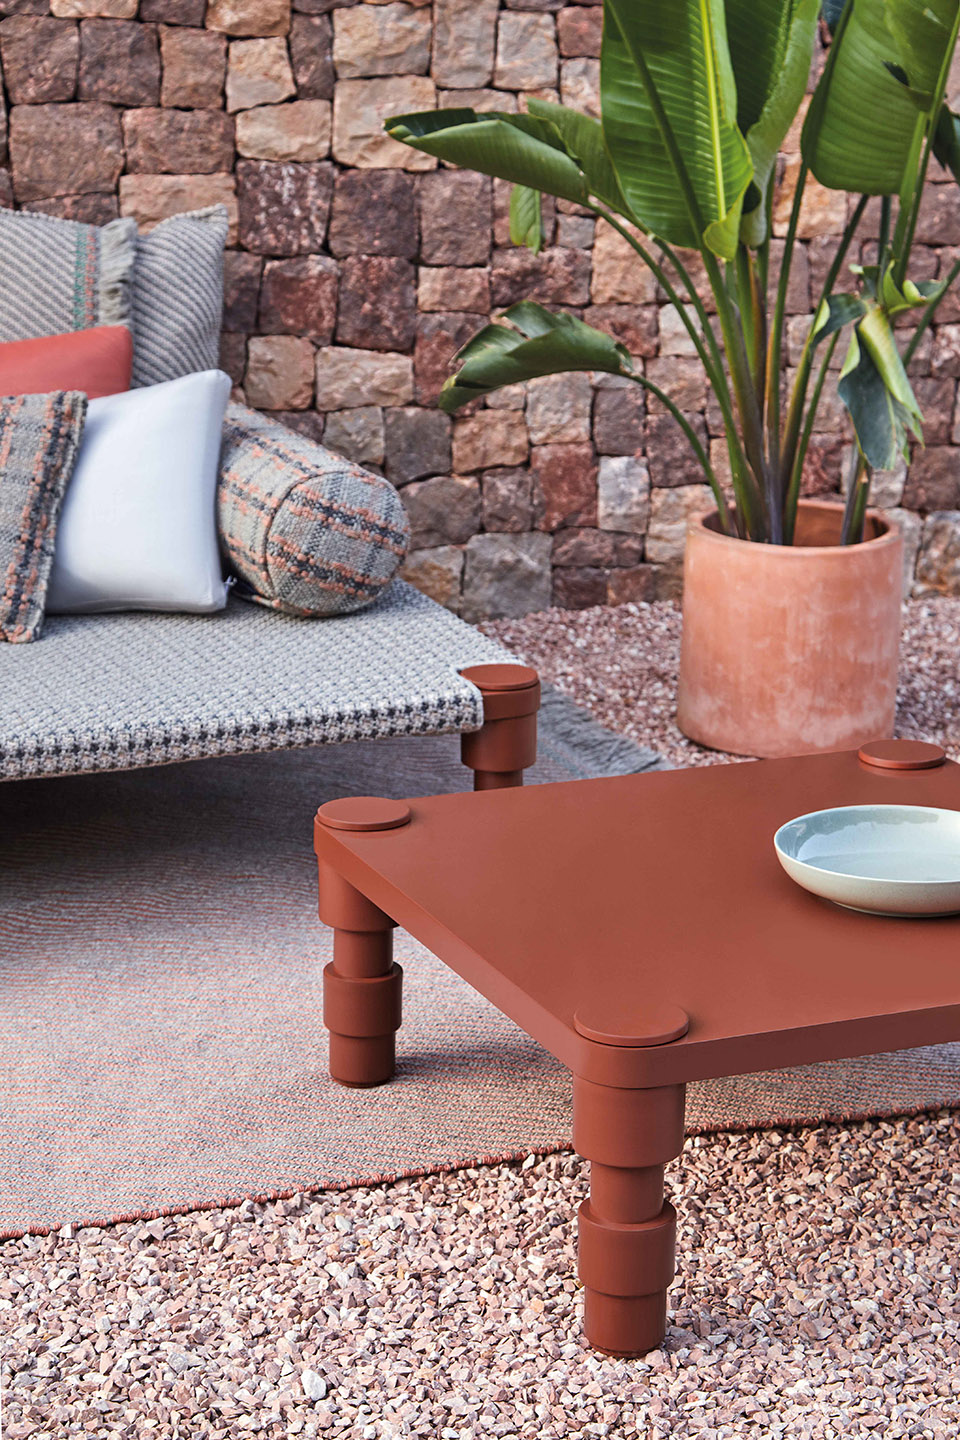 Garden Layers印度床与边桌系列/灵感源于莫卧儿帝国的古老习俗-125